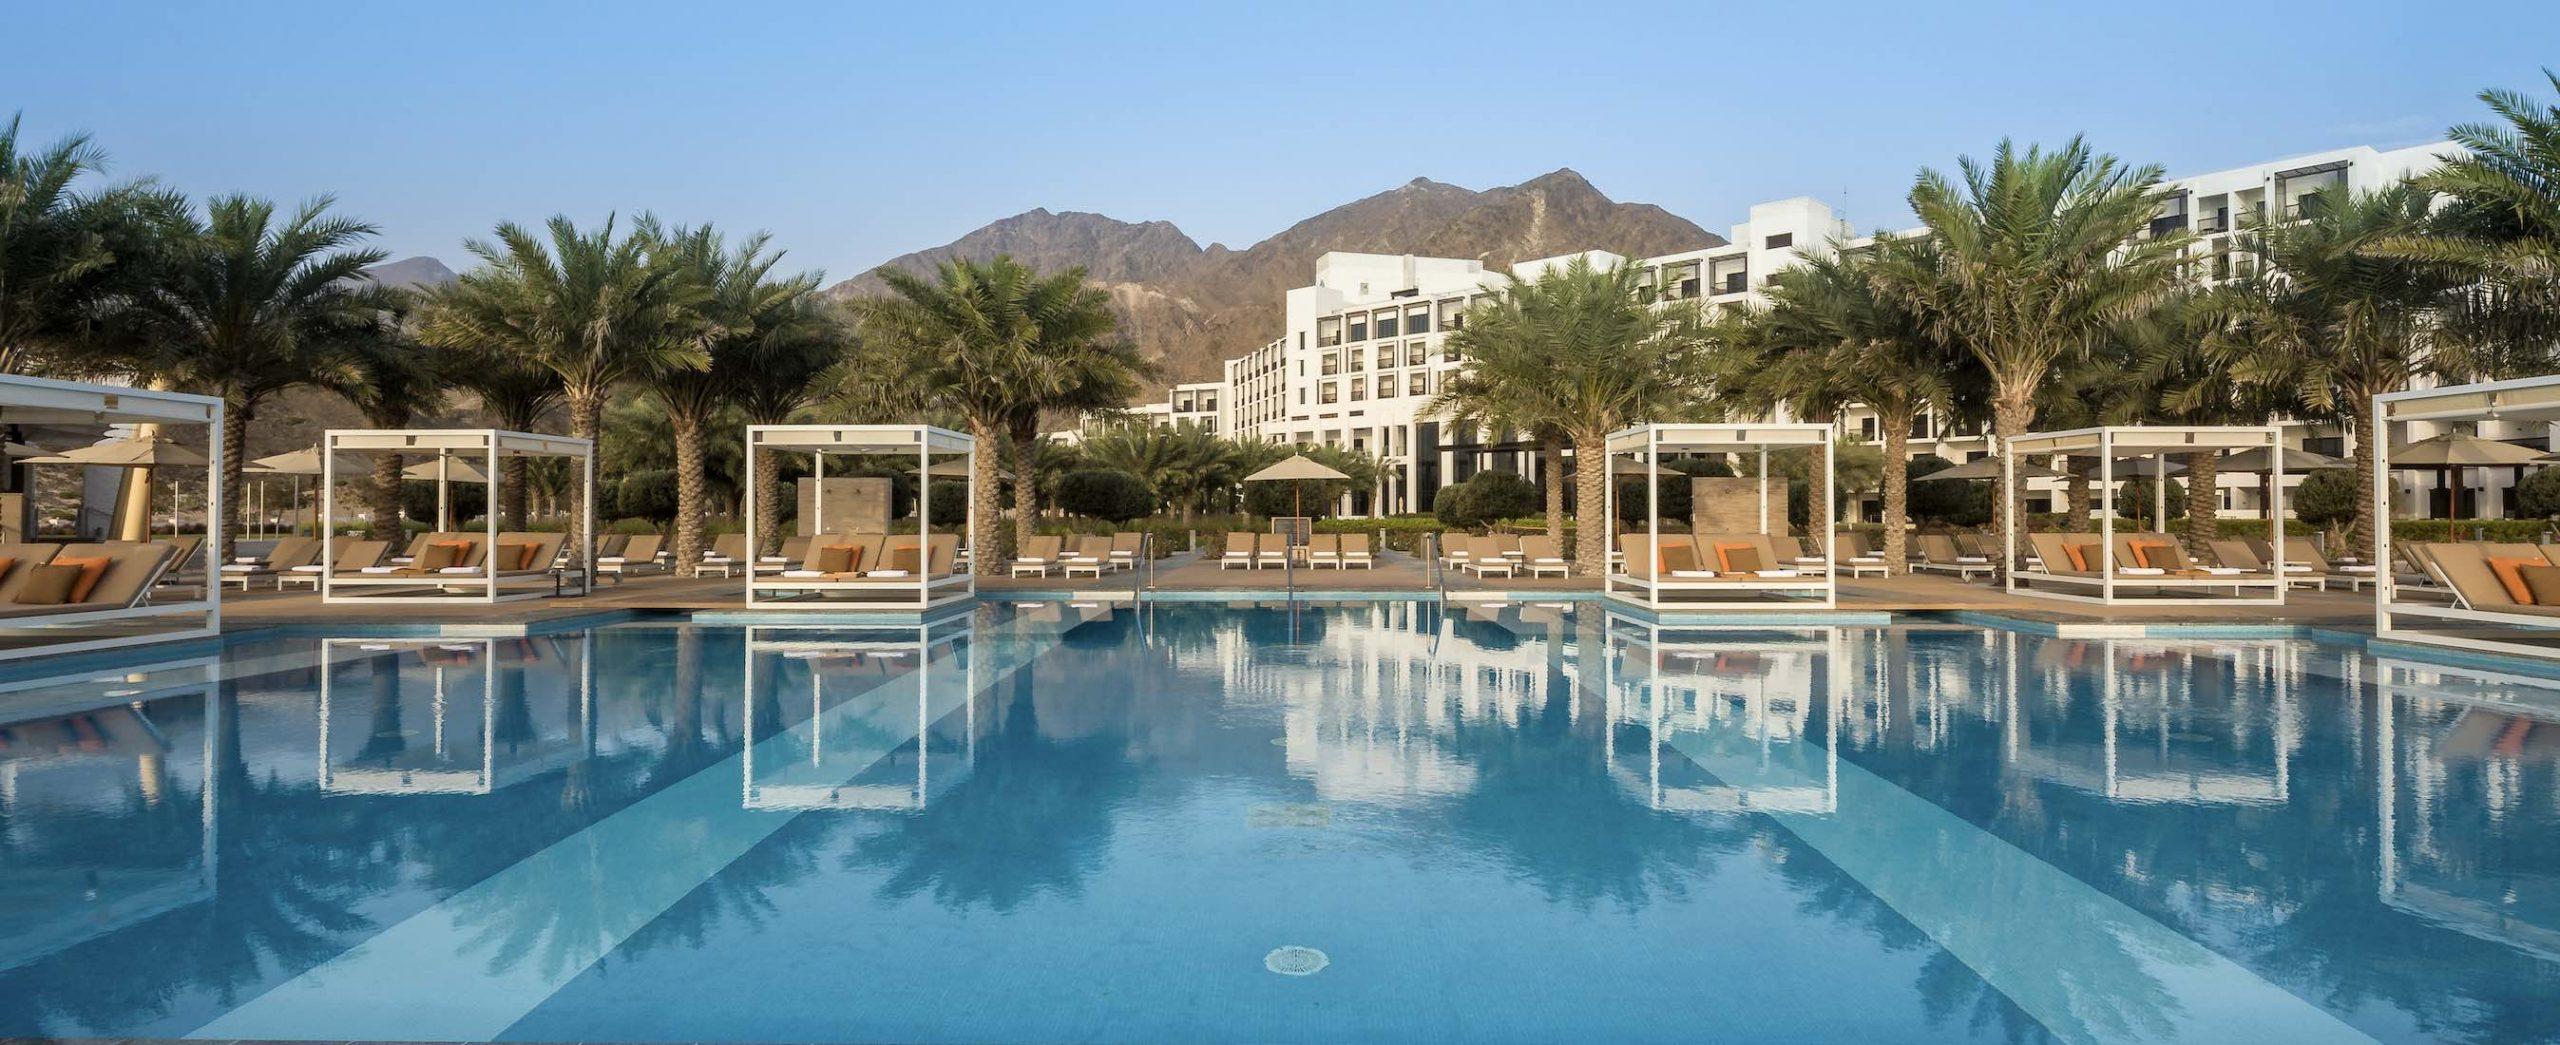 Spa Review: O Spa by L’occitane at InterContinental Fujairah Resort